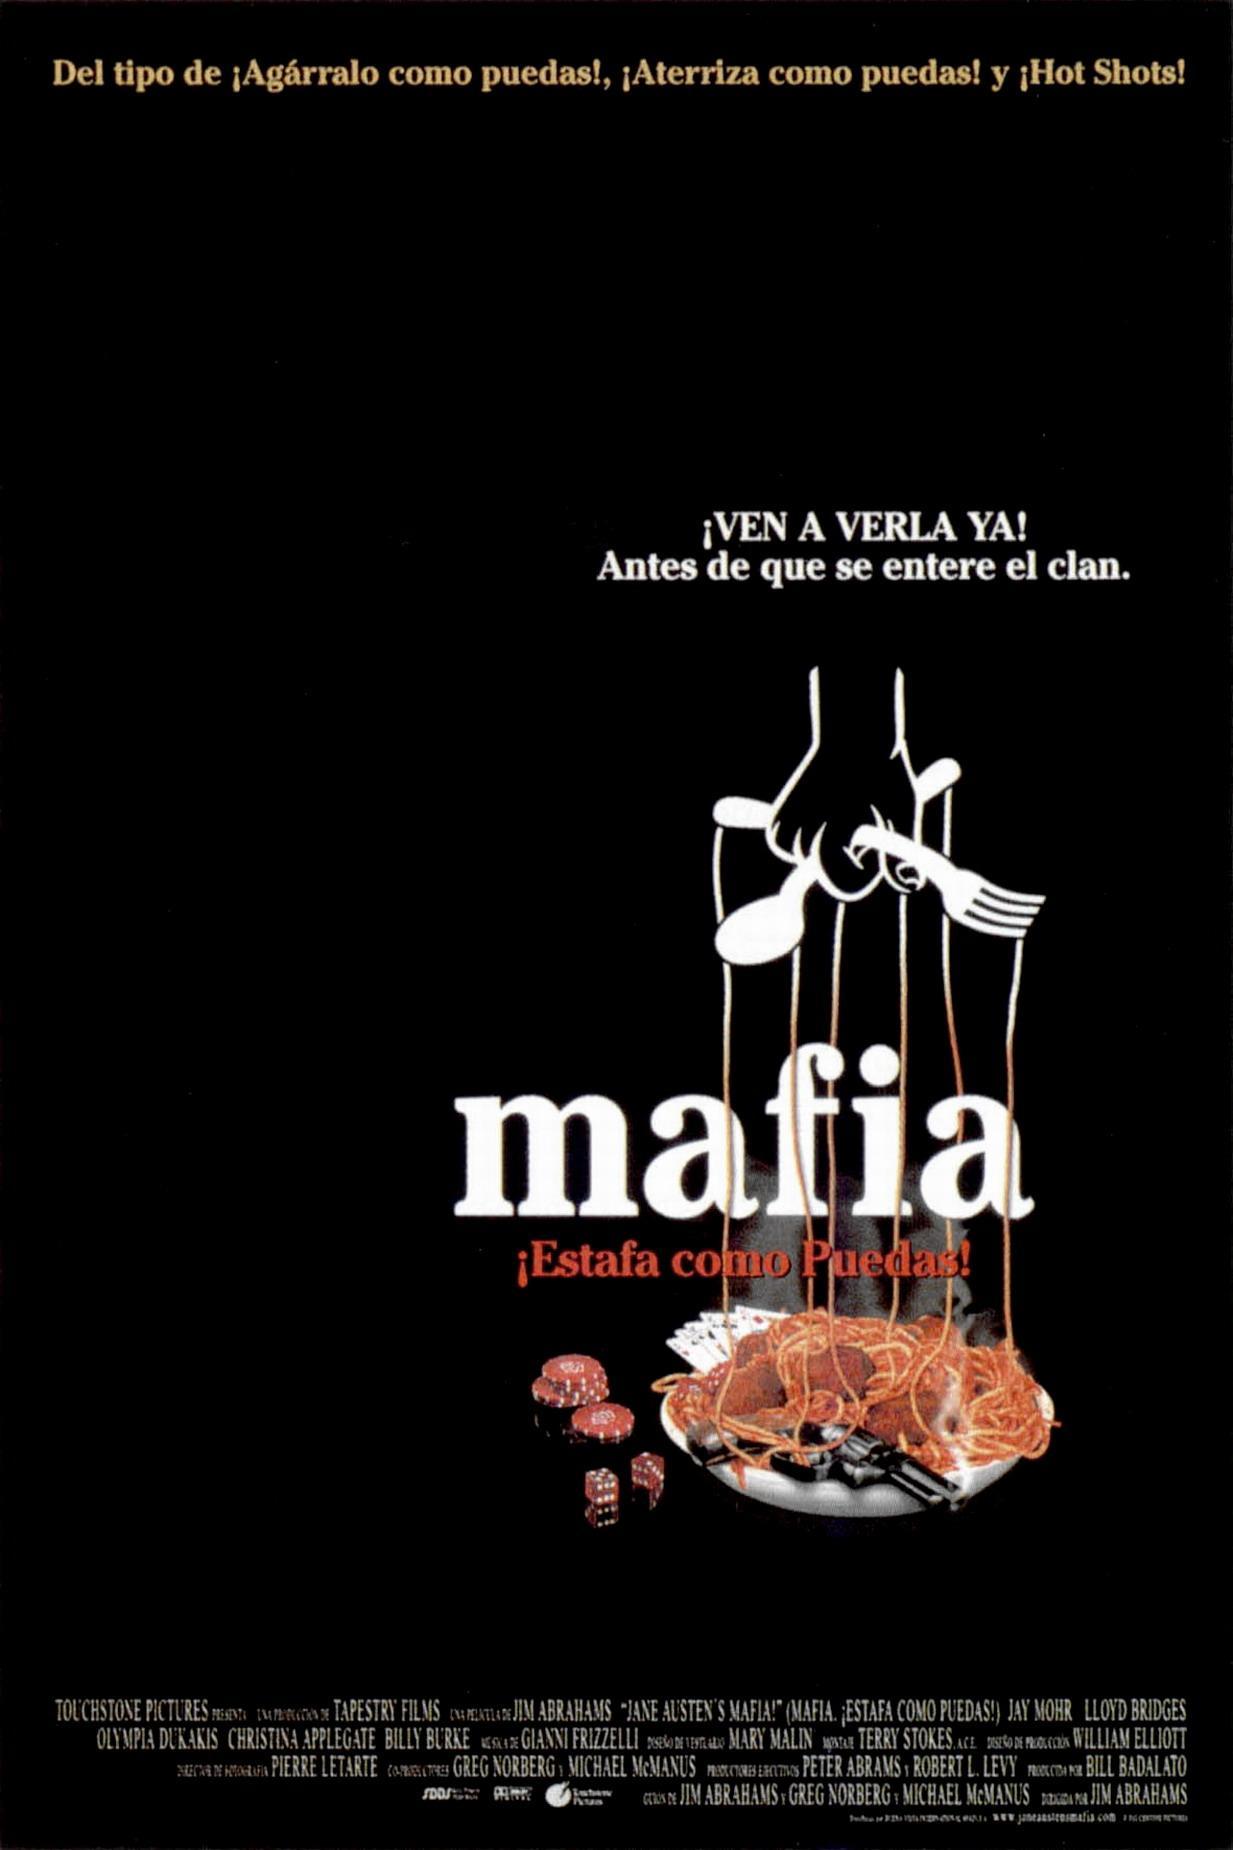 Постер фильма Мафия Джейн Остин | Jane Austen's Mafia!